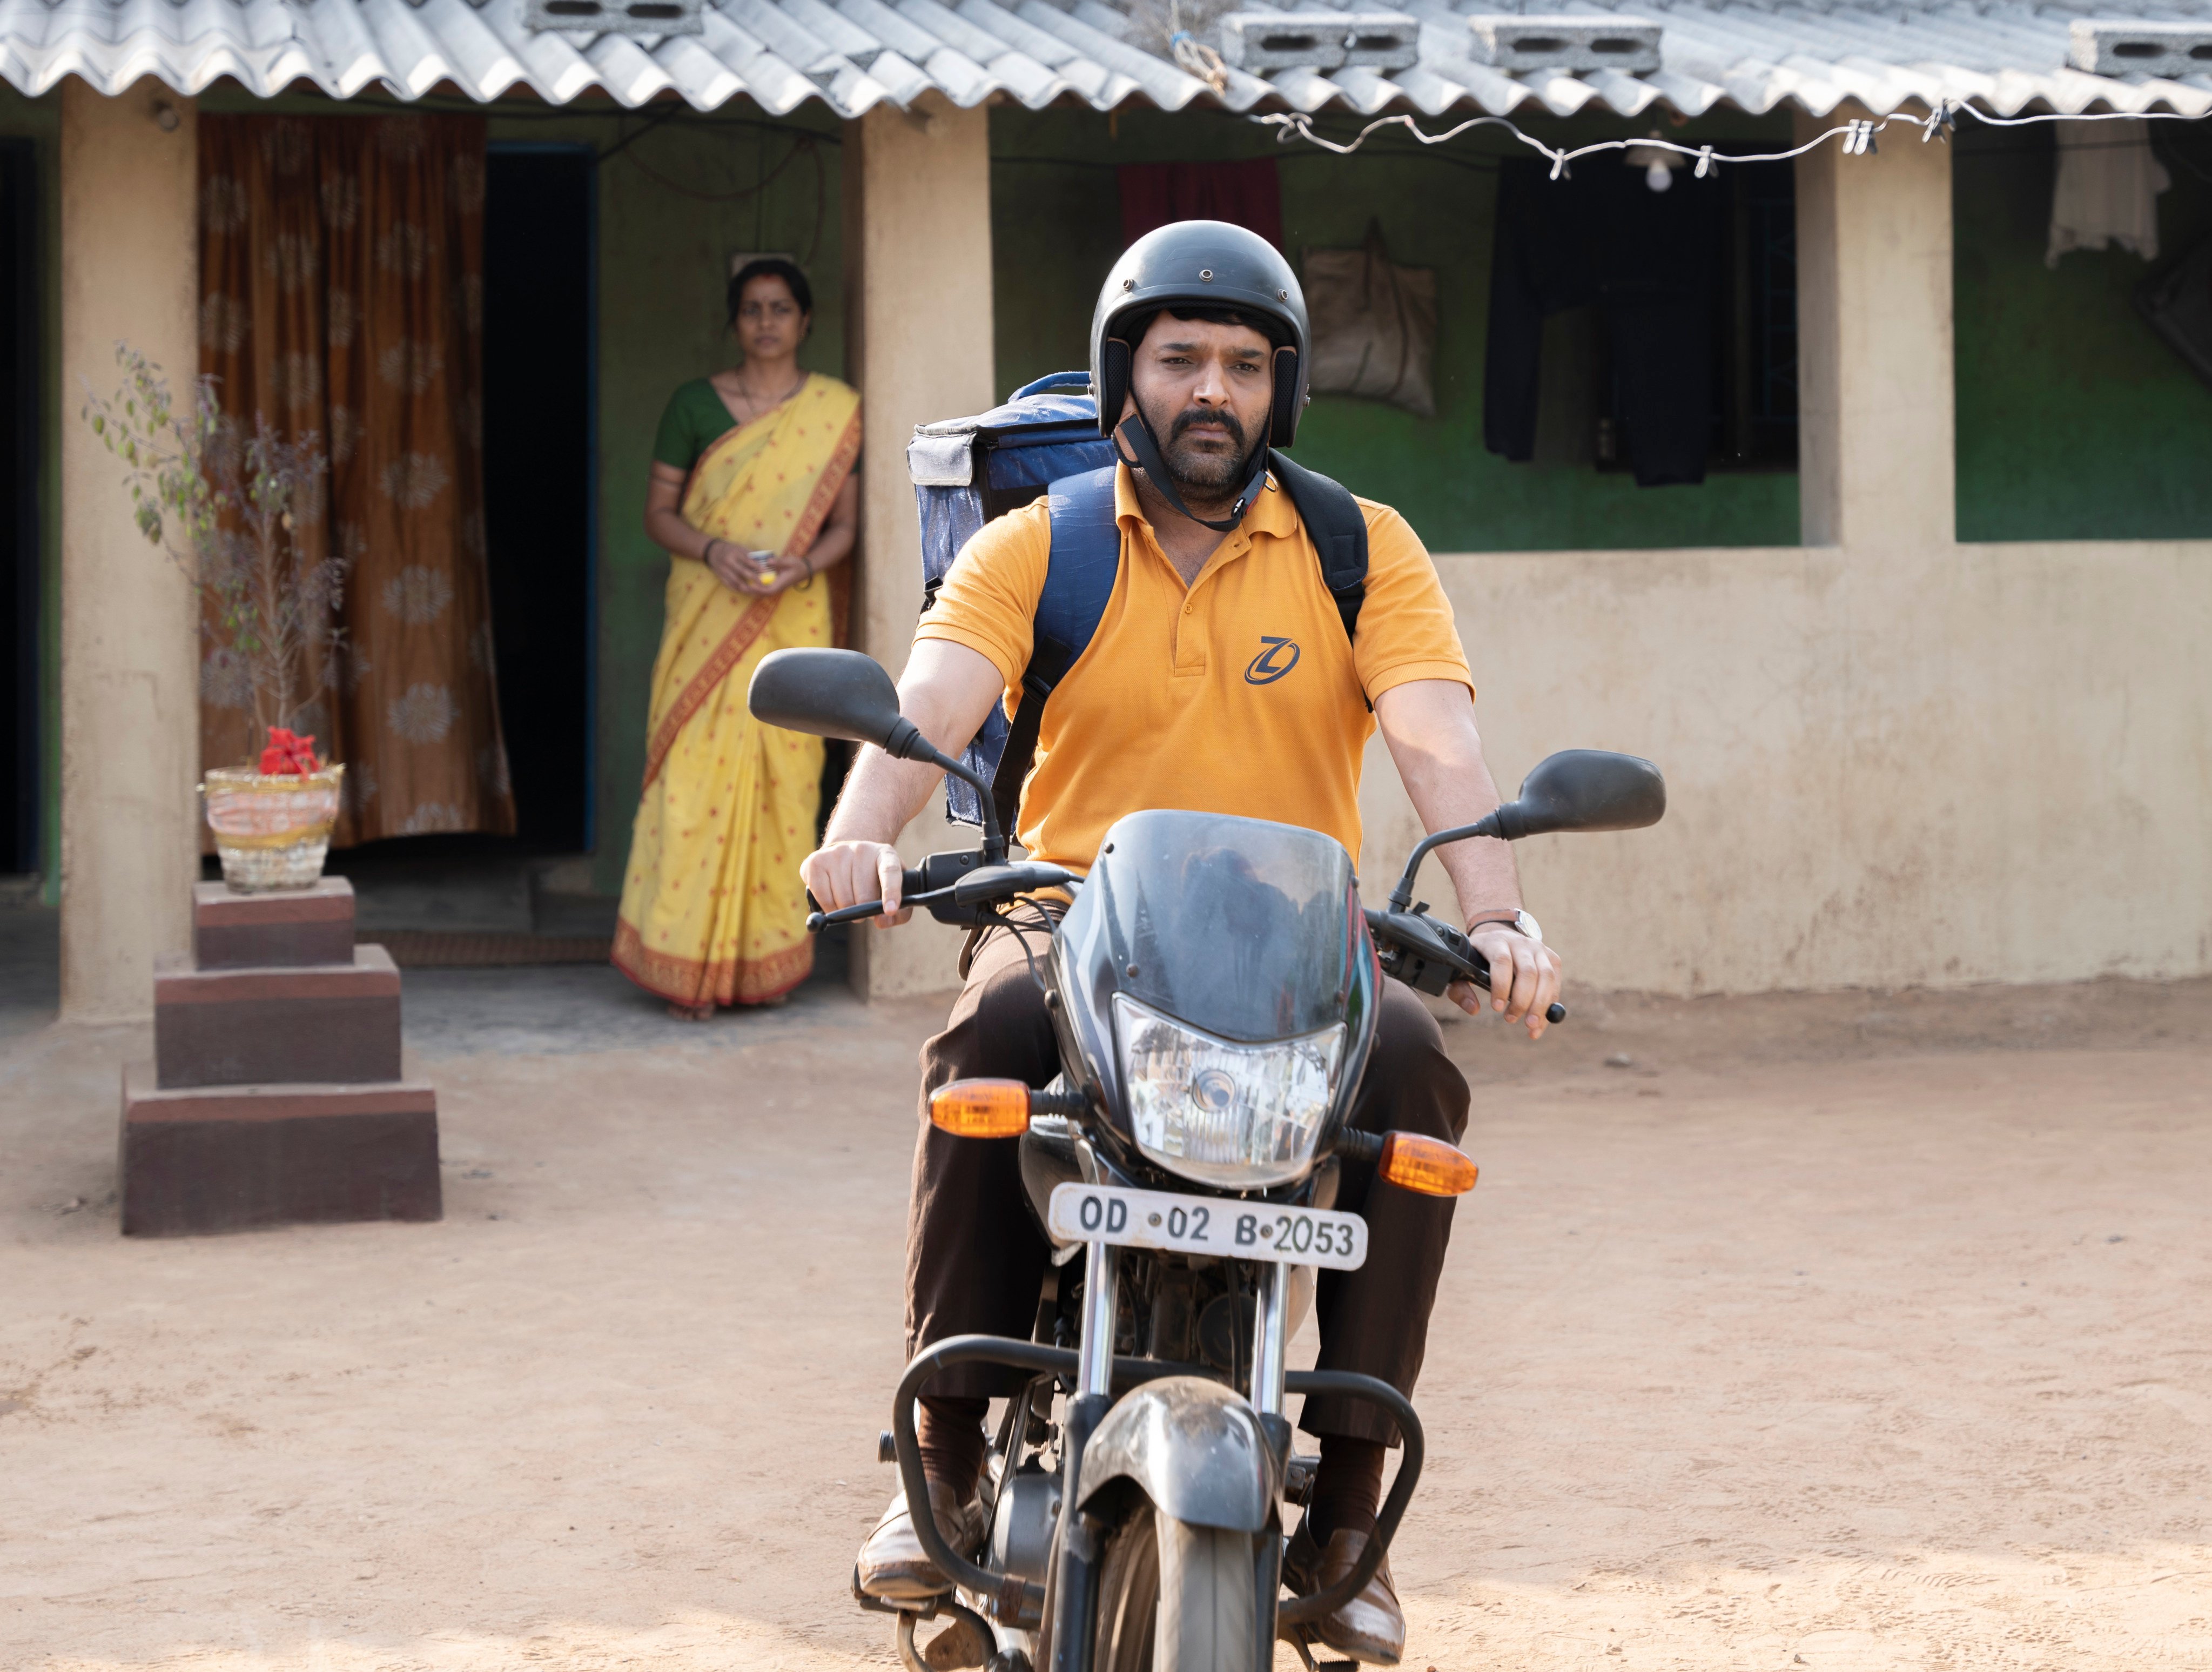 Actor Kapil Sharma as Manas Singh, a food delivery rider, in the film “Zwigato”. Photo: Nandita Das